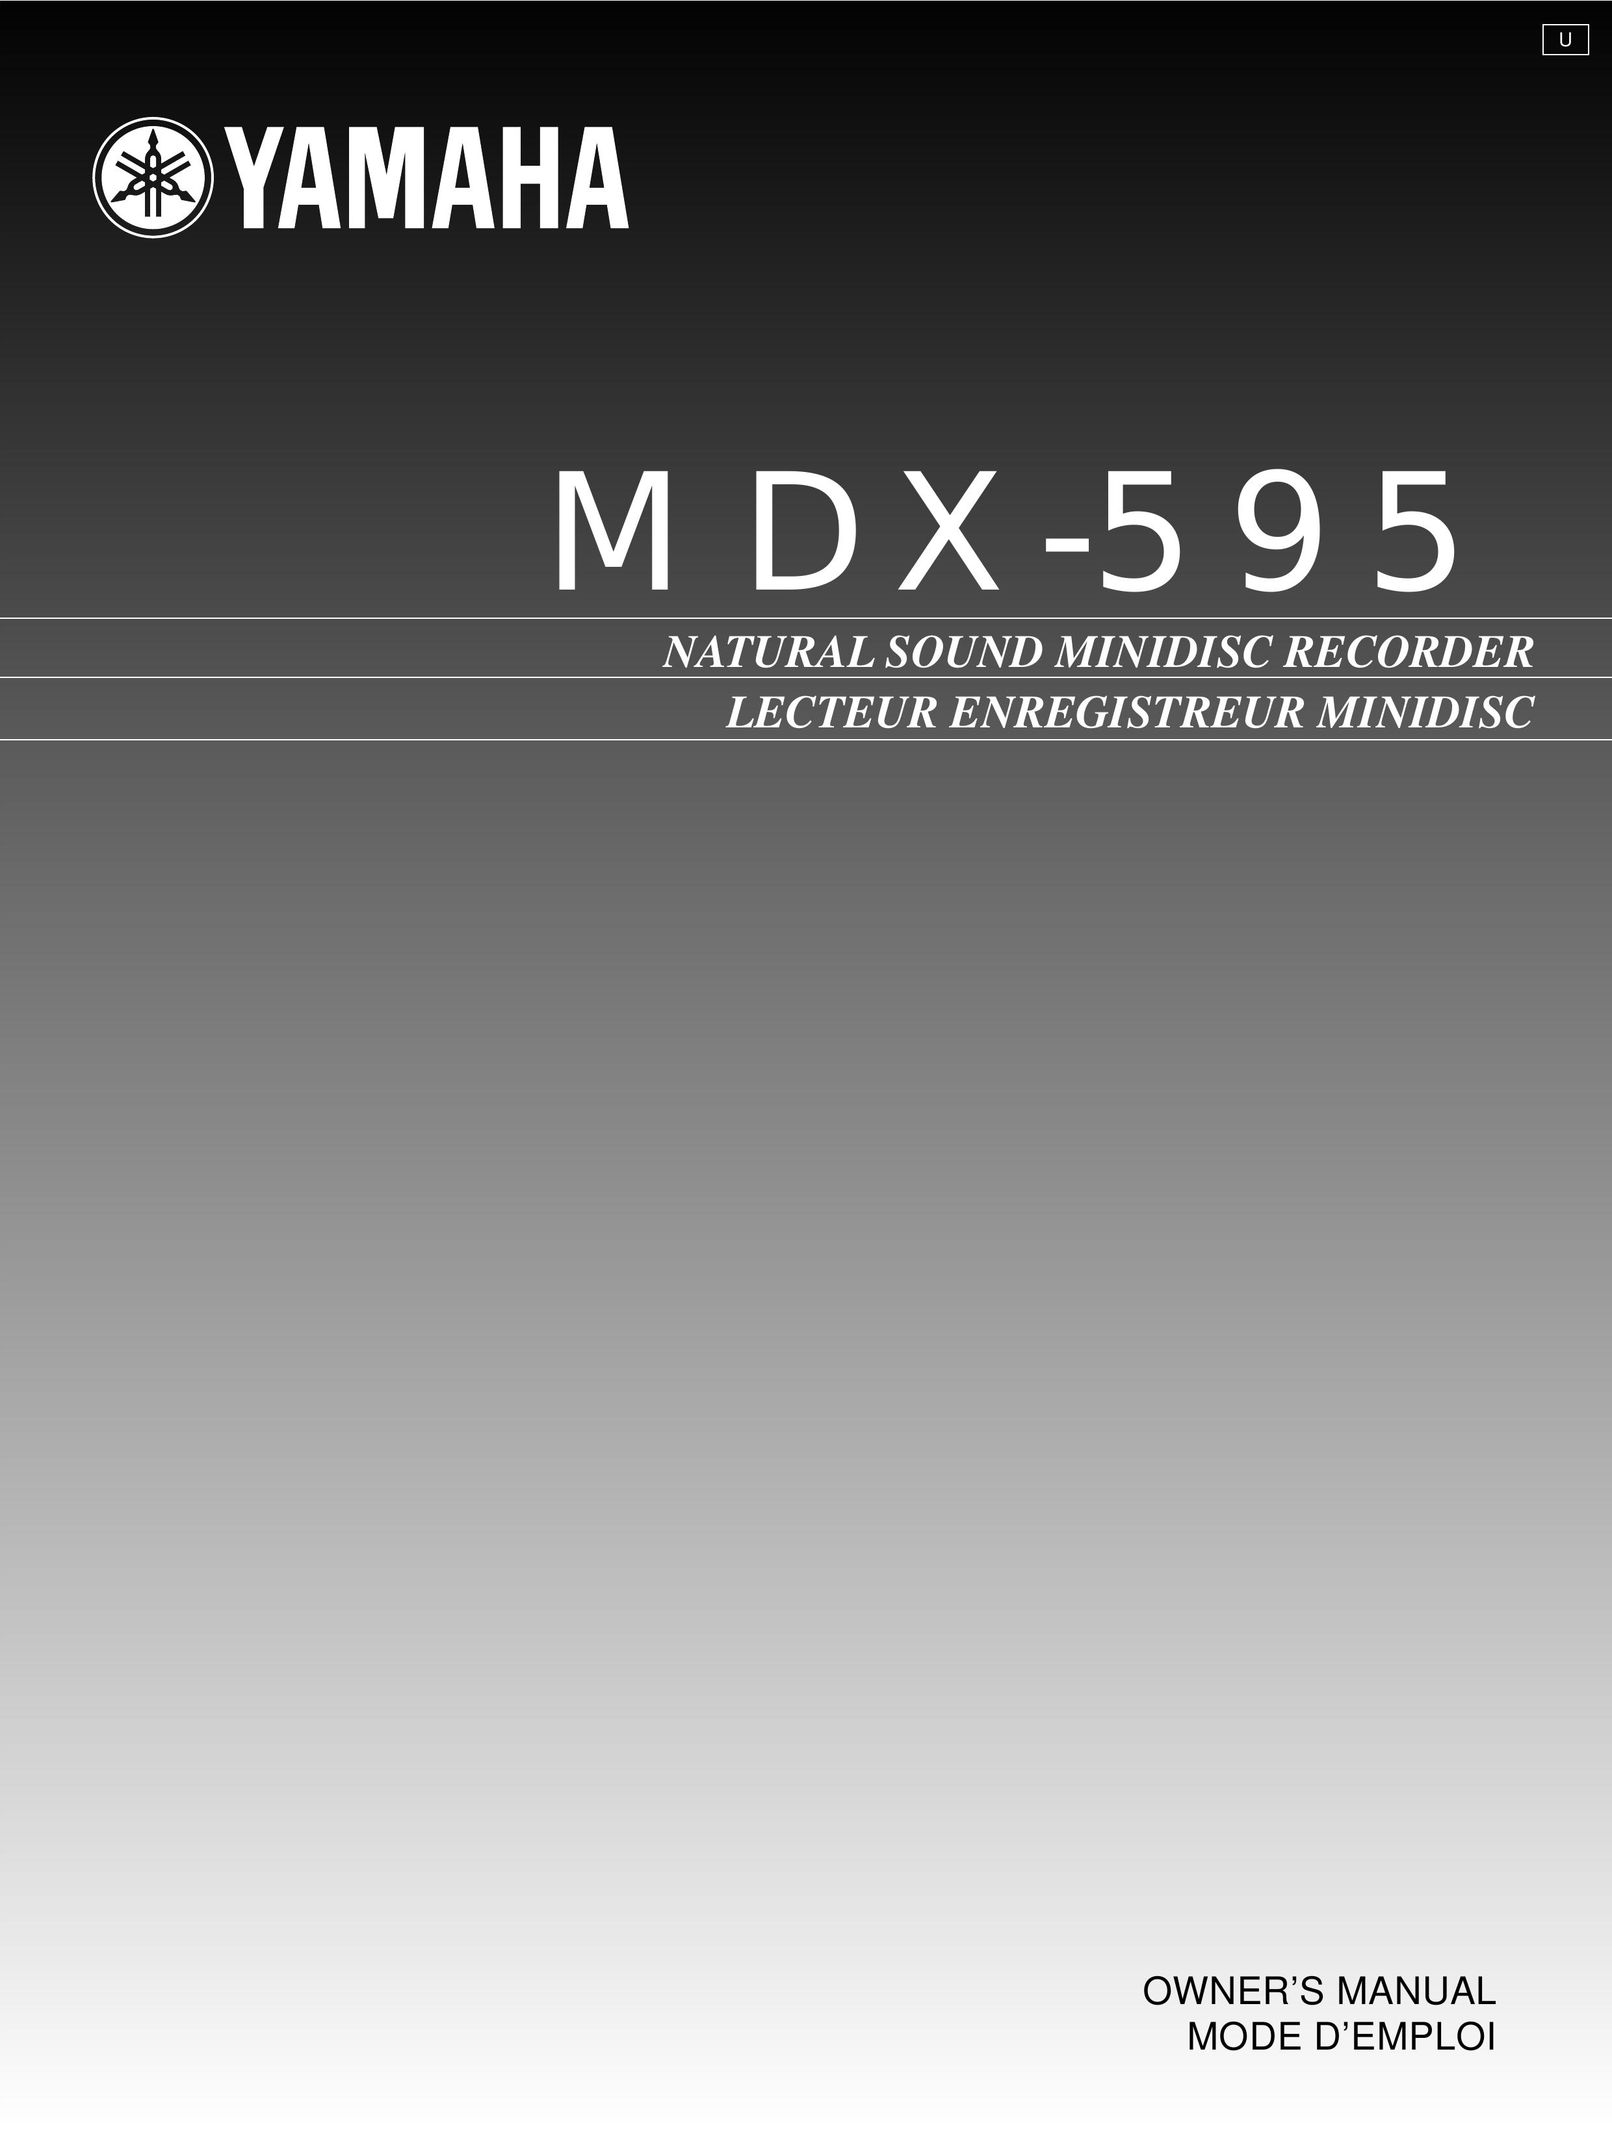 Yamaha MDX-595 MiniDisc Player User Manual